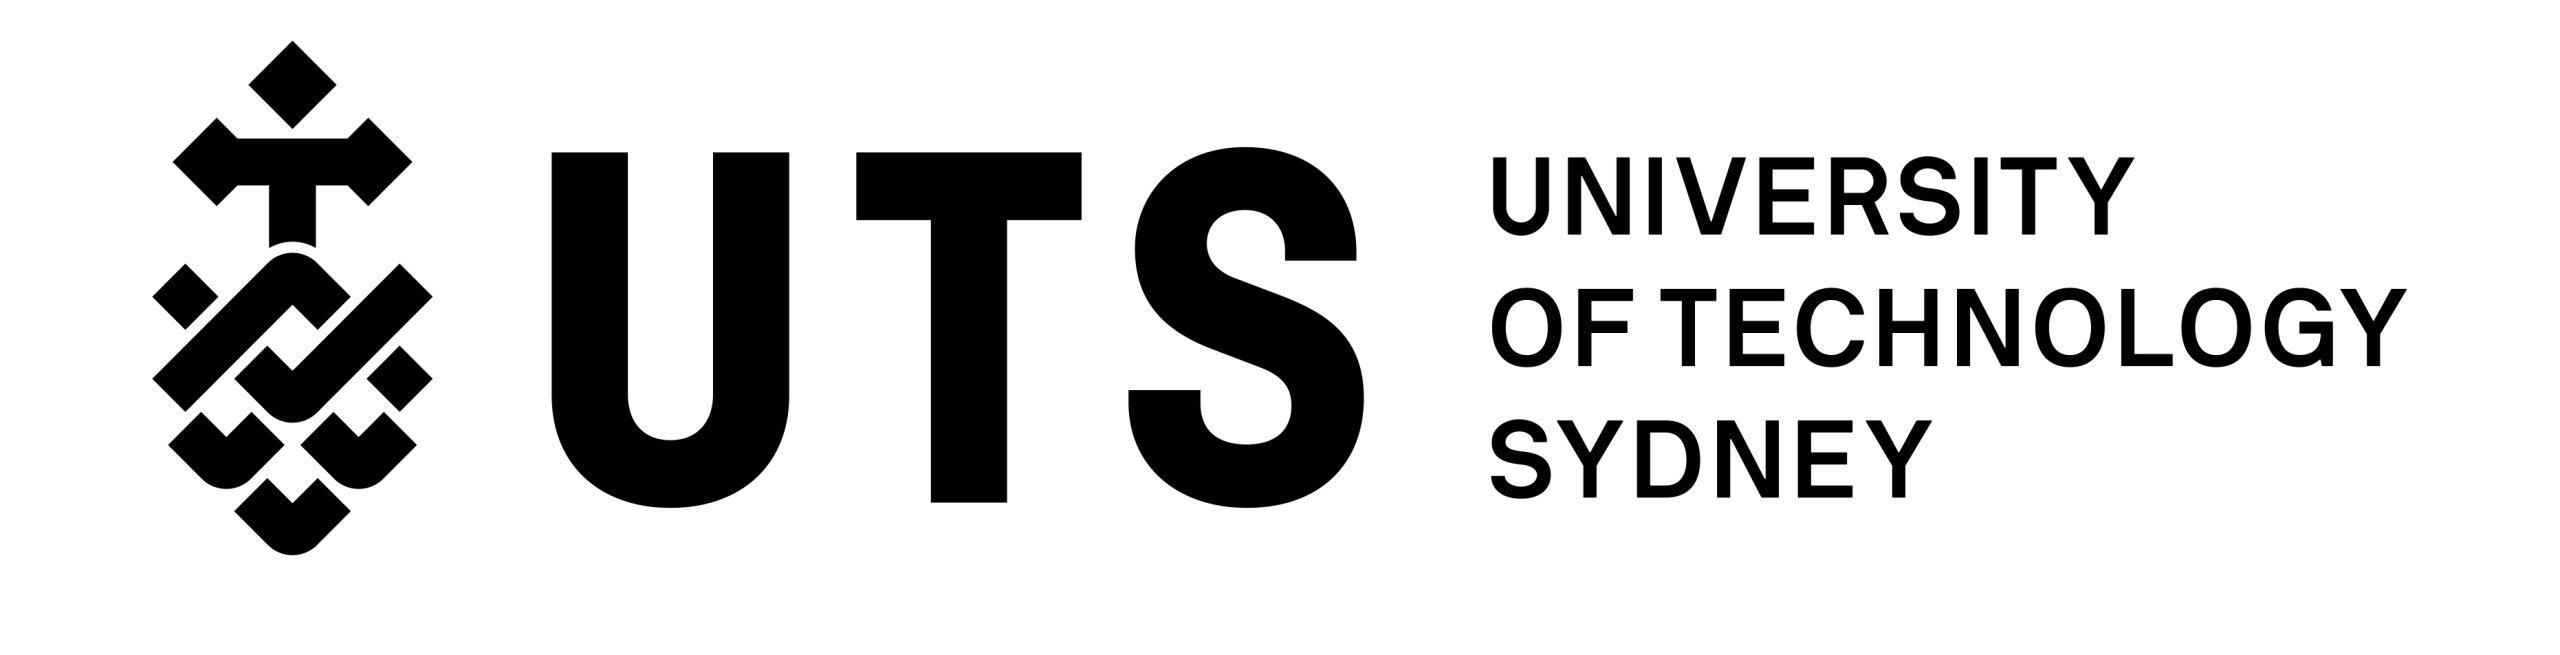 University of Technology Sydney (UTS)